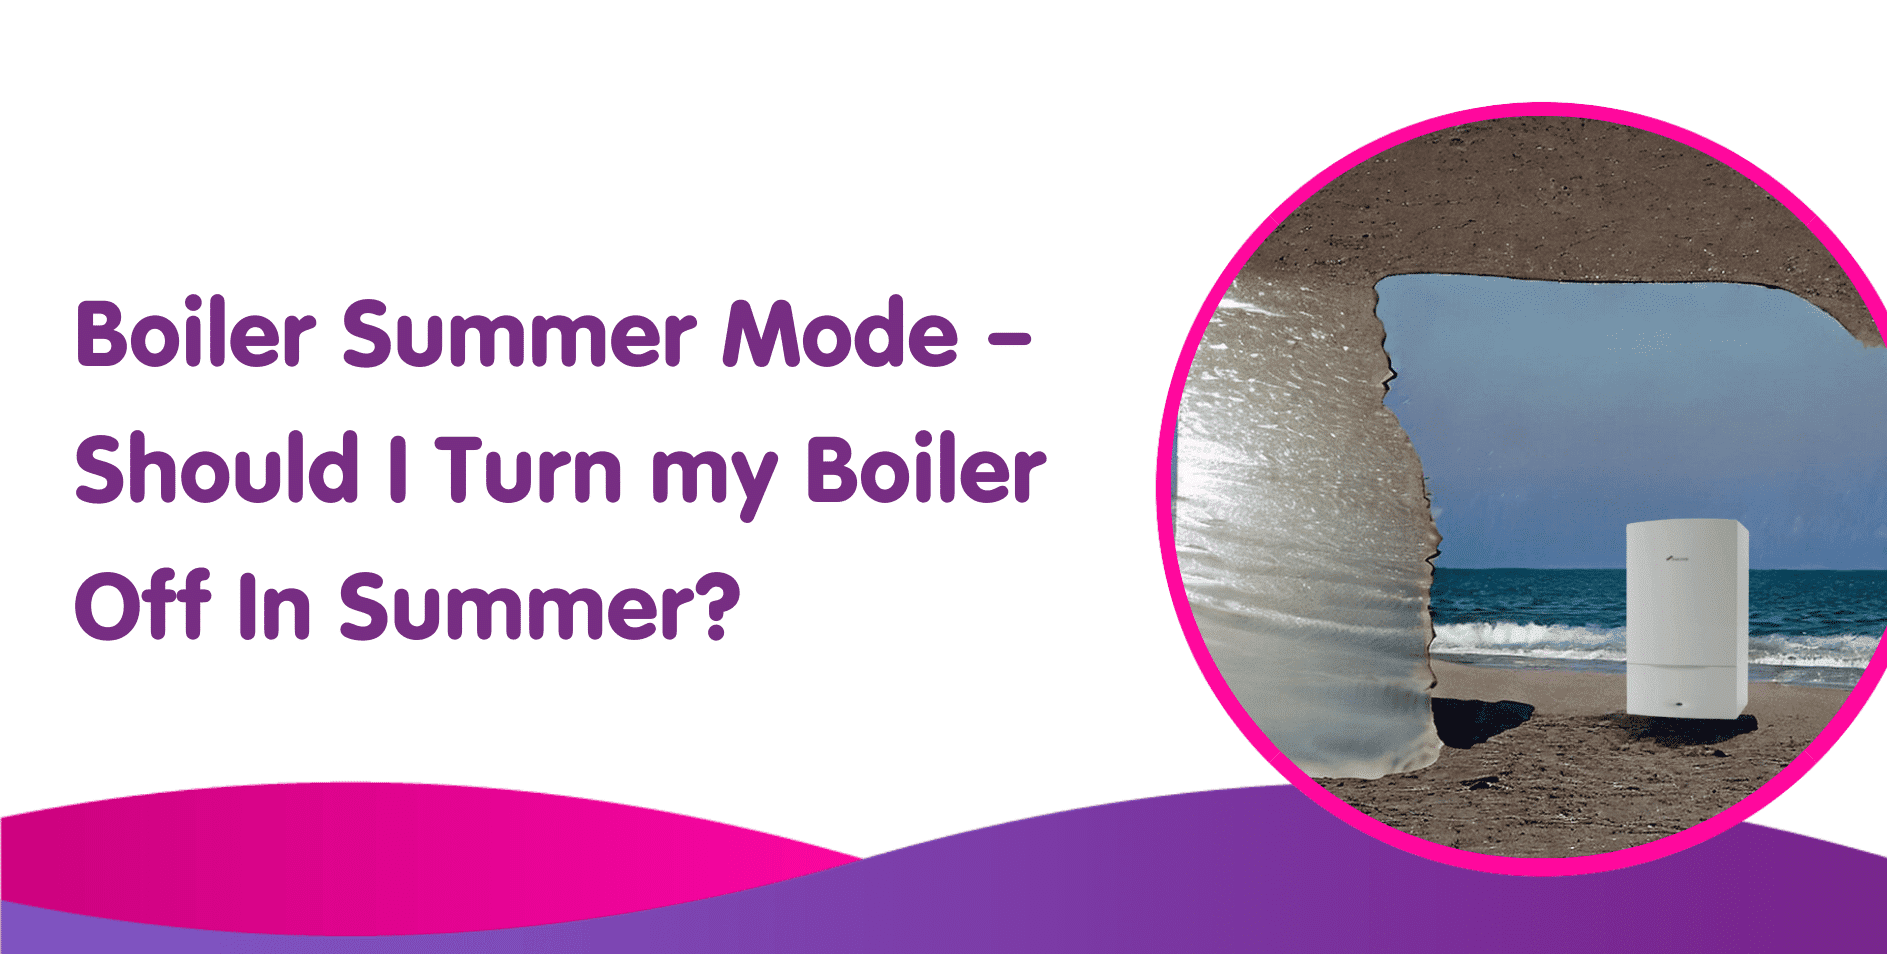 Boiler Work In The Summer?